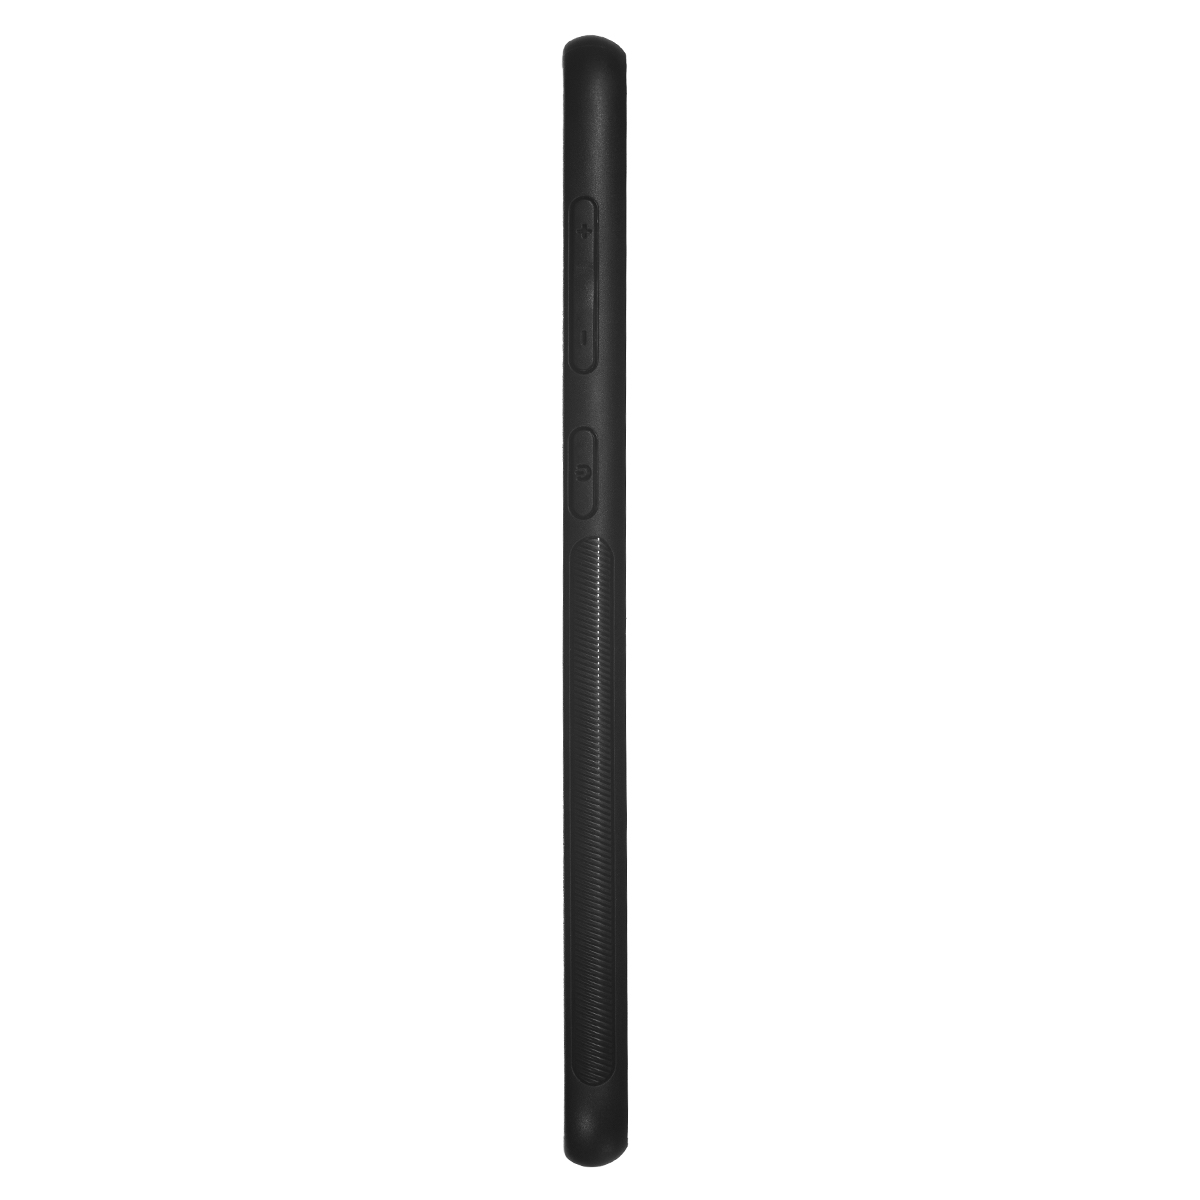 Husa Spate Oglinda Samsung Galaxy M10, Negru thumb